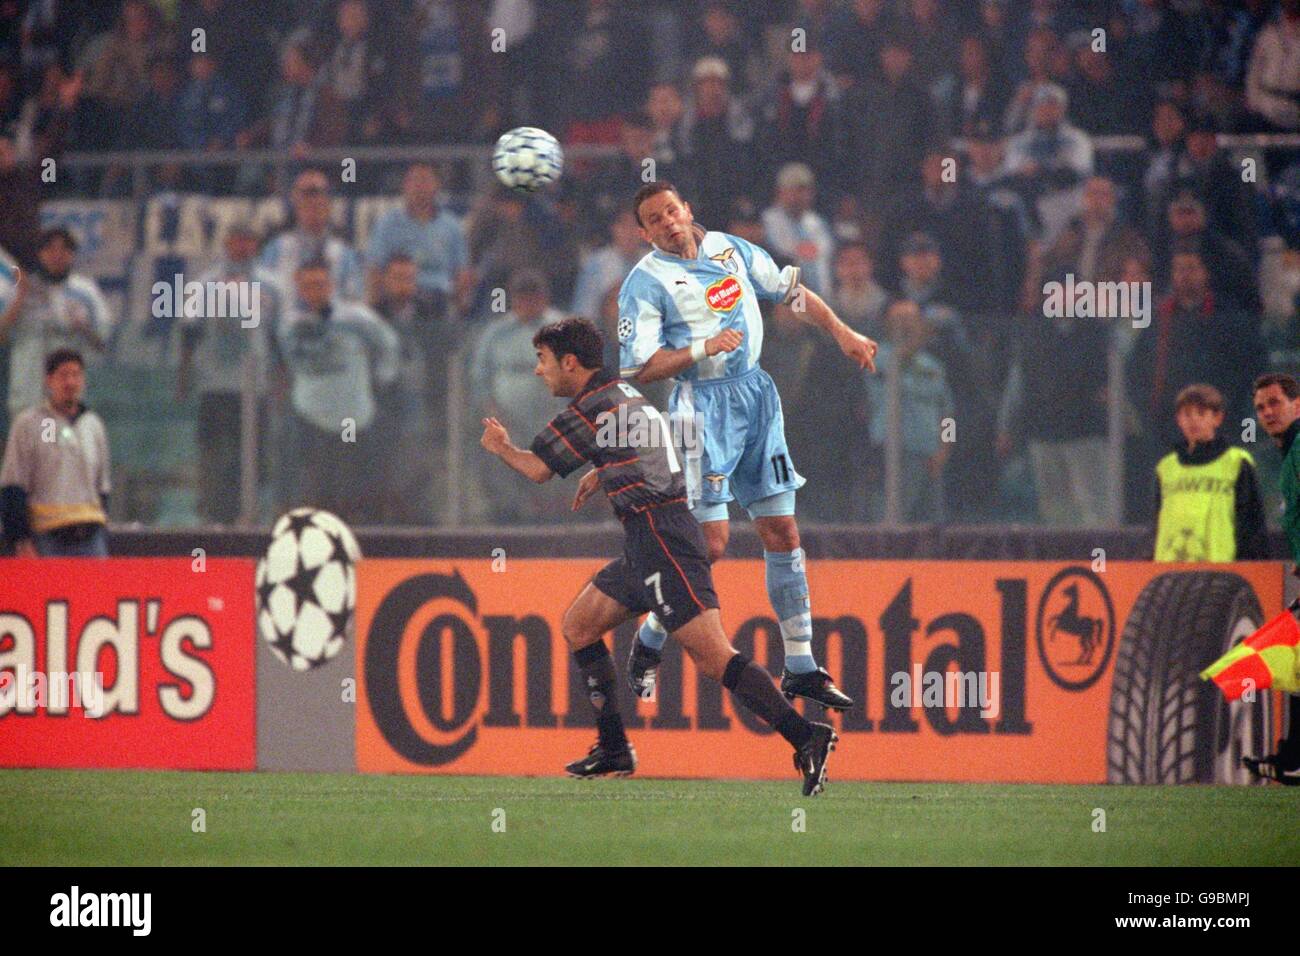 Soccer - UEFA Champions League - Quarter Final Second Leg - Lazio v Valencia. Lazio's Sinisa Mihajlovic (r) beats Valencia's Claudio Lopez (l) to a header Stock Photo